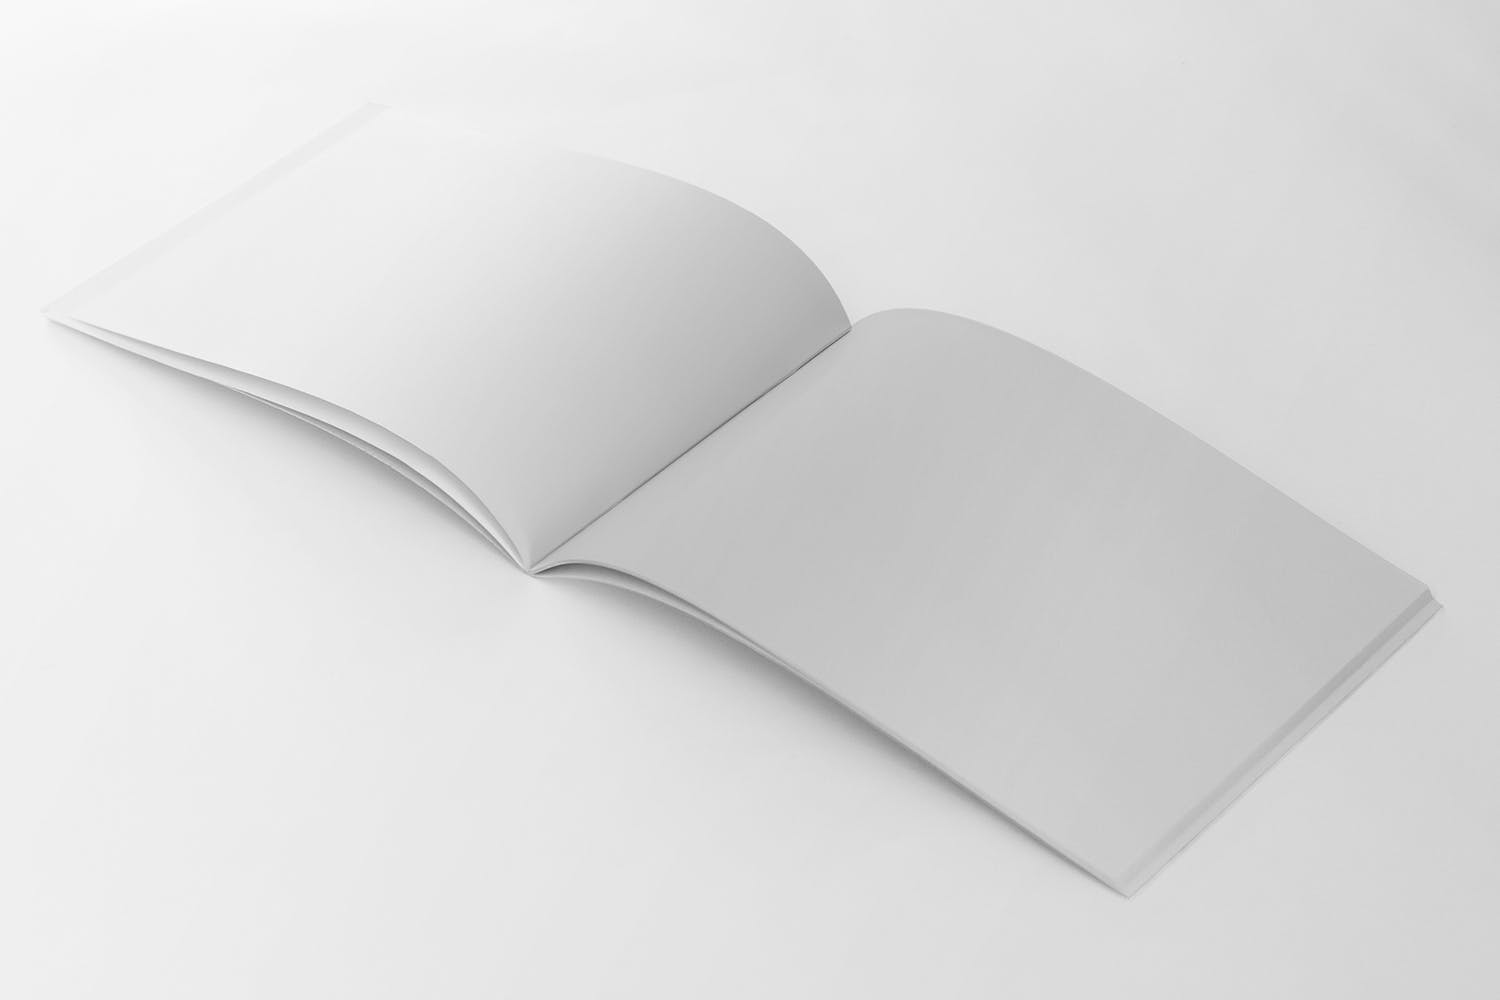 美国信纸规格宣传册内页透视图样机素材中国精选 US Half Letter Brochure Mockup Perspective View插图(1)